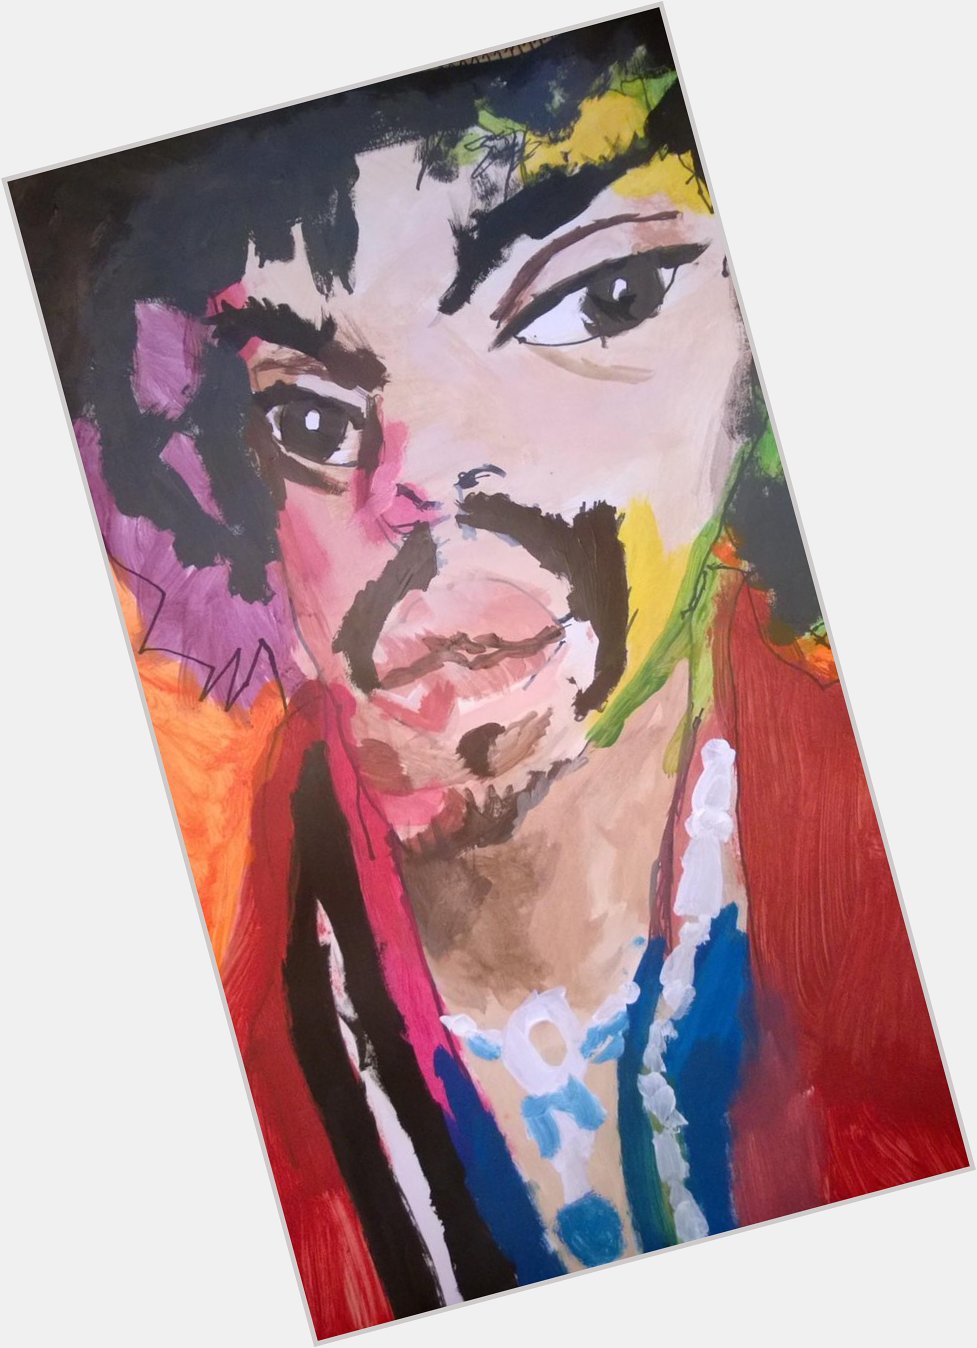 Happy Birthday to Jimi Hendrix! Portrait by Jake Chodosh available at  